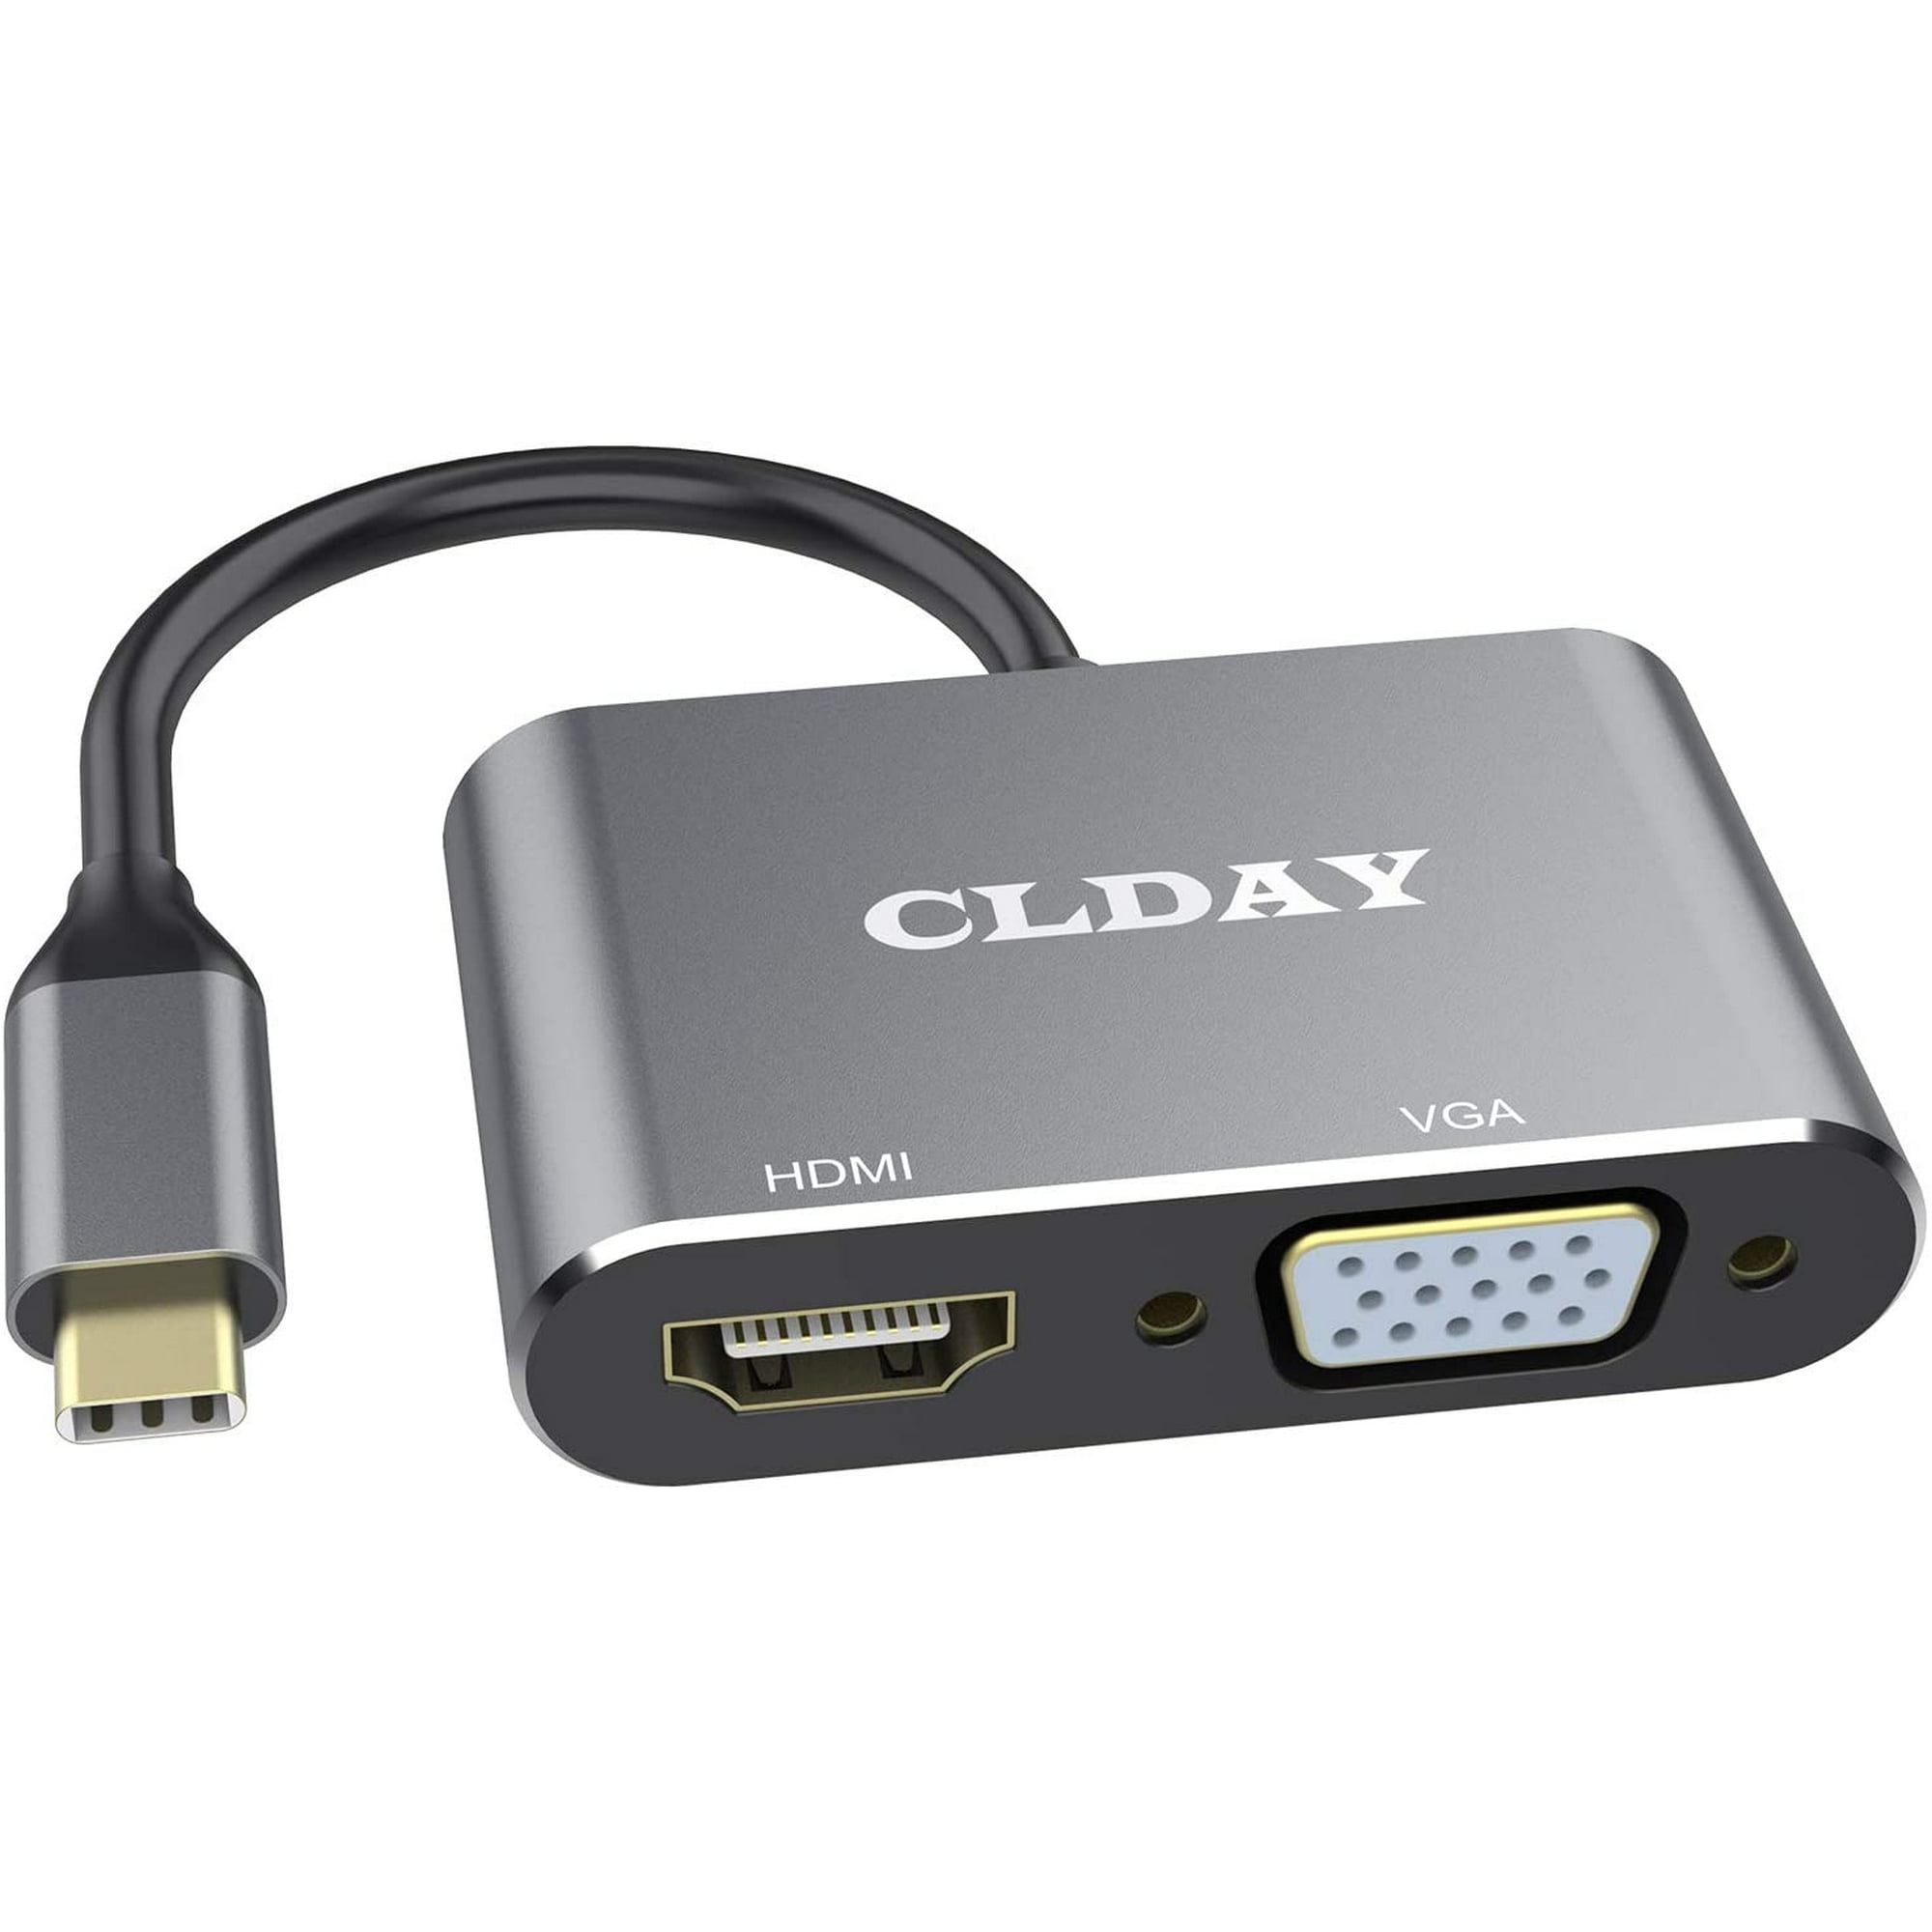 Usb c vga. Адаптер USB C 2 HDMI. Thunderbolt 3 to HDMI VGA. USB-C to VGA HDMI. VGA HDMI USB.